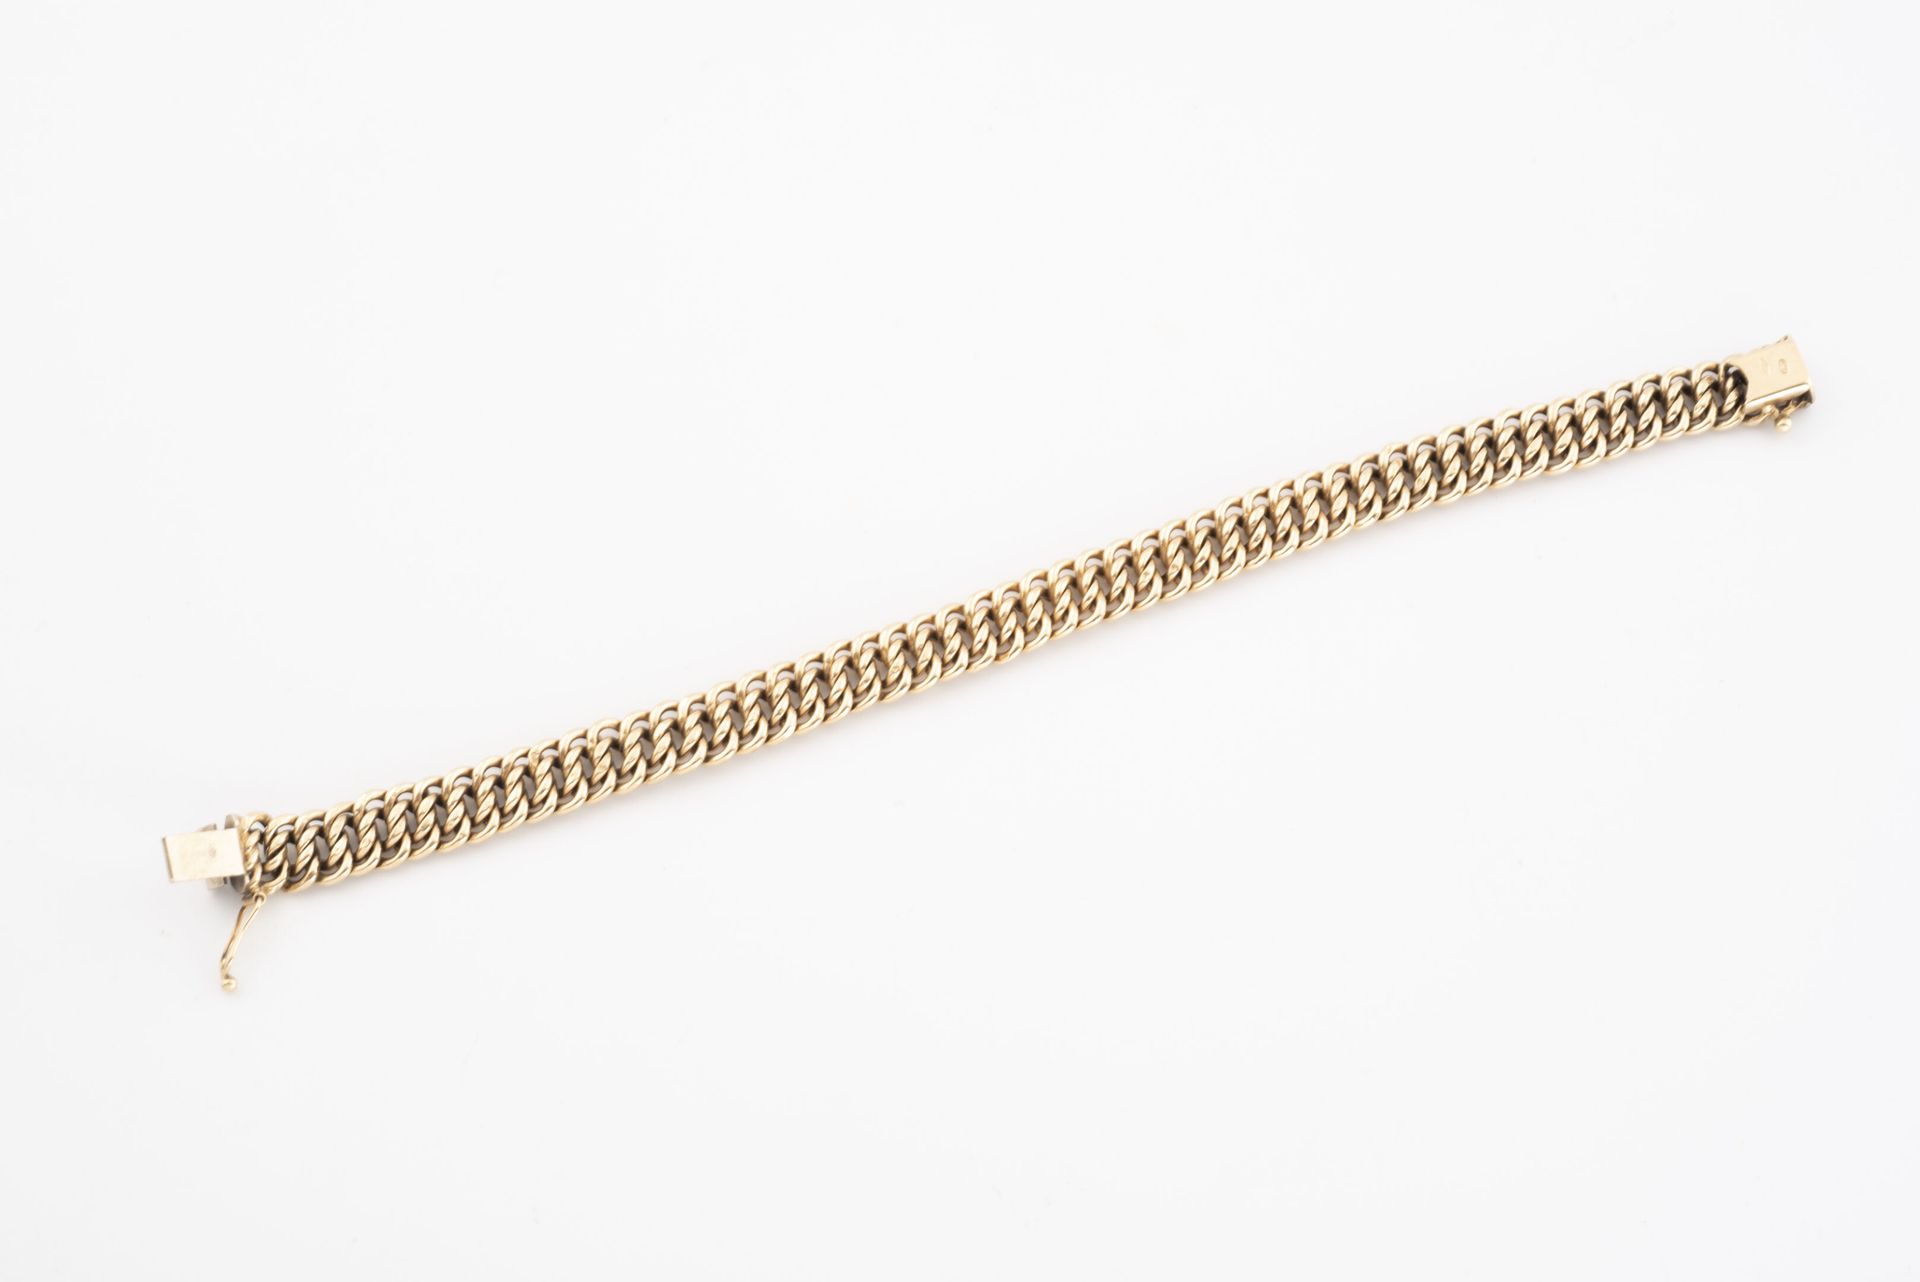 Null 黄K金（750），带美式链接，部分锉刀。

棘轮扣，有八个安全销。

重量：12.3克。- 长度：20厘米。

小震荡。